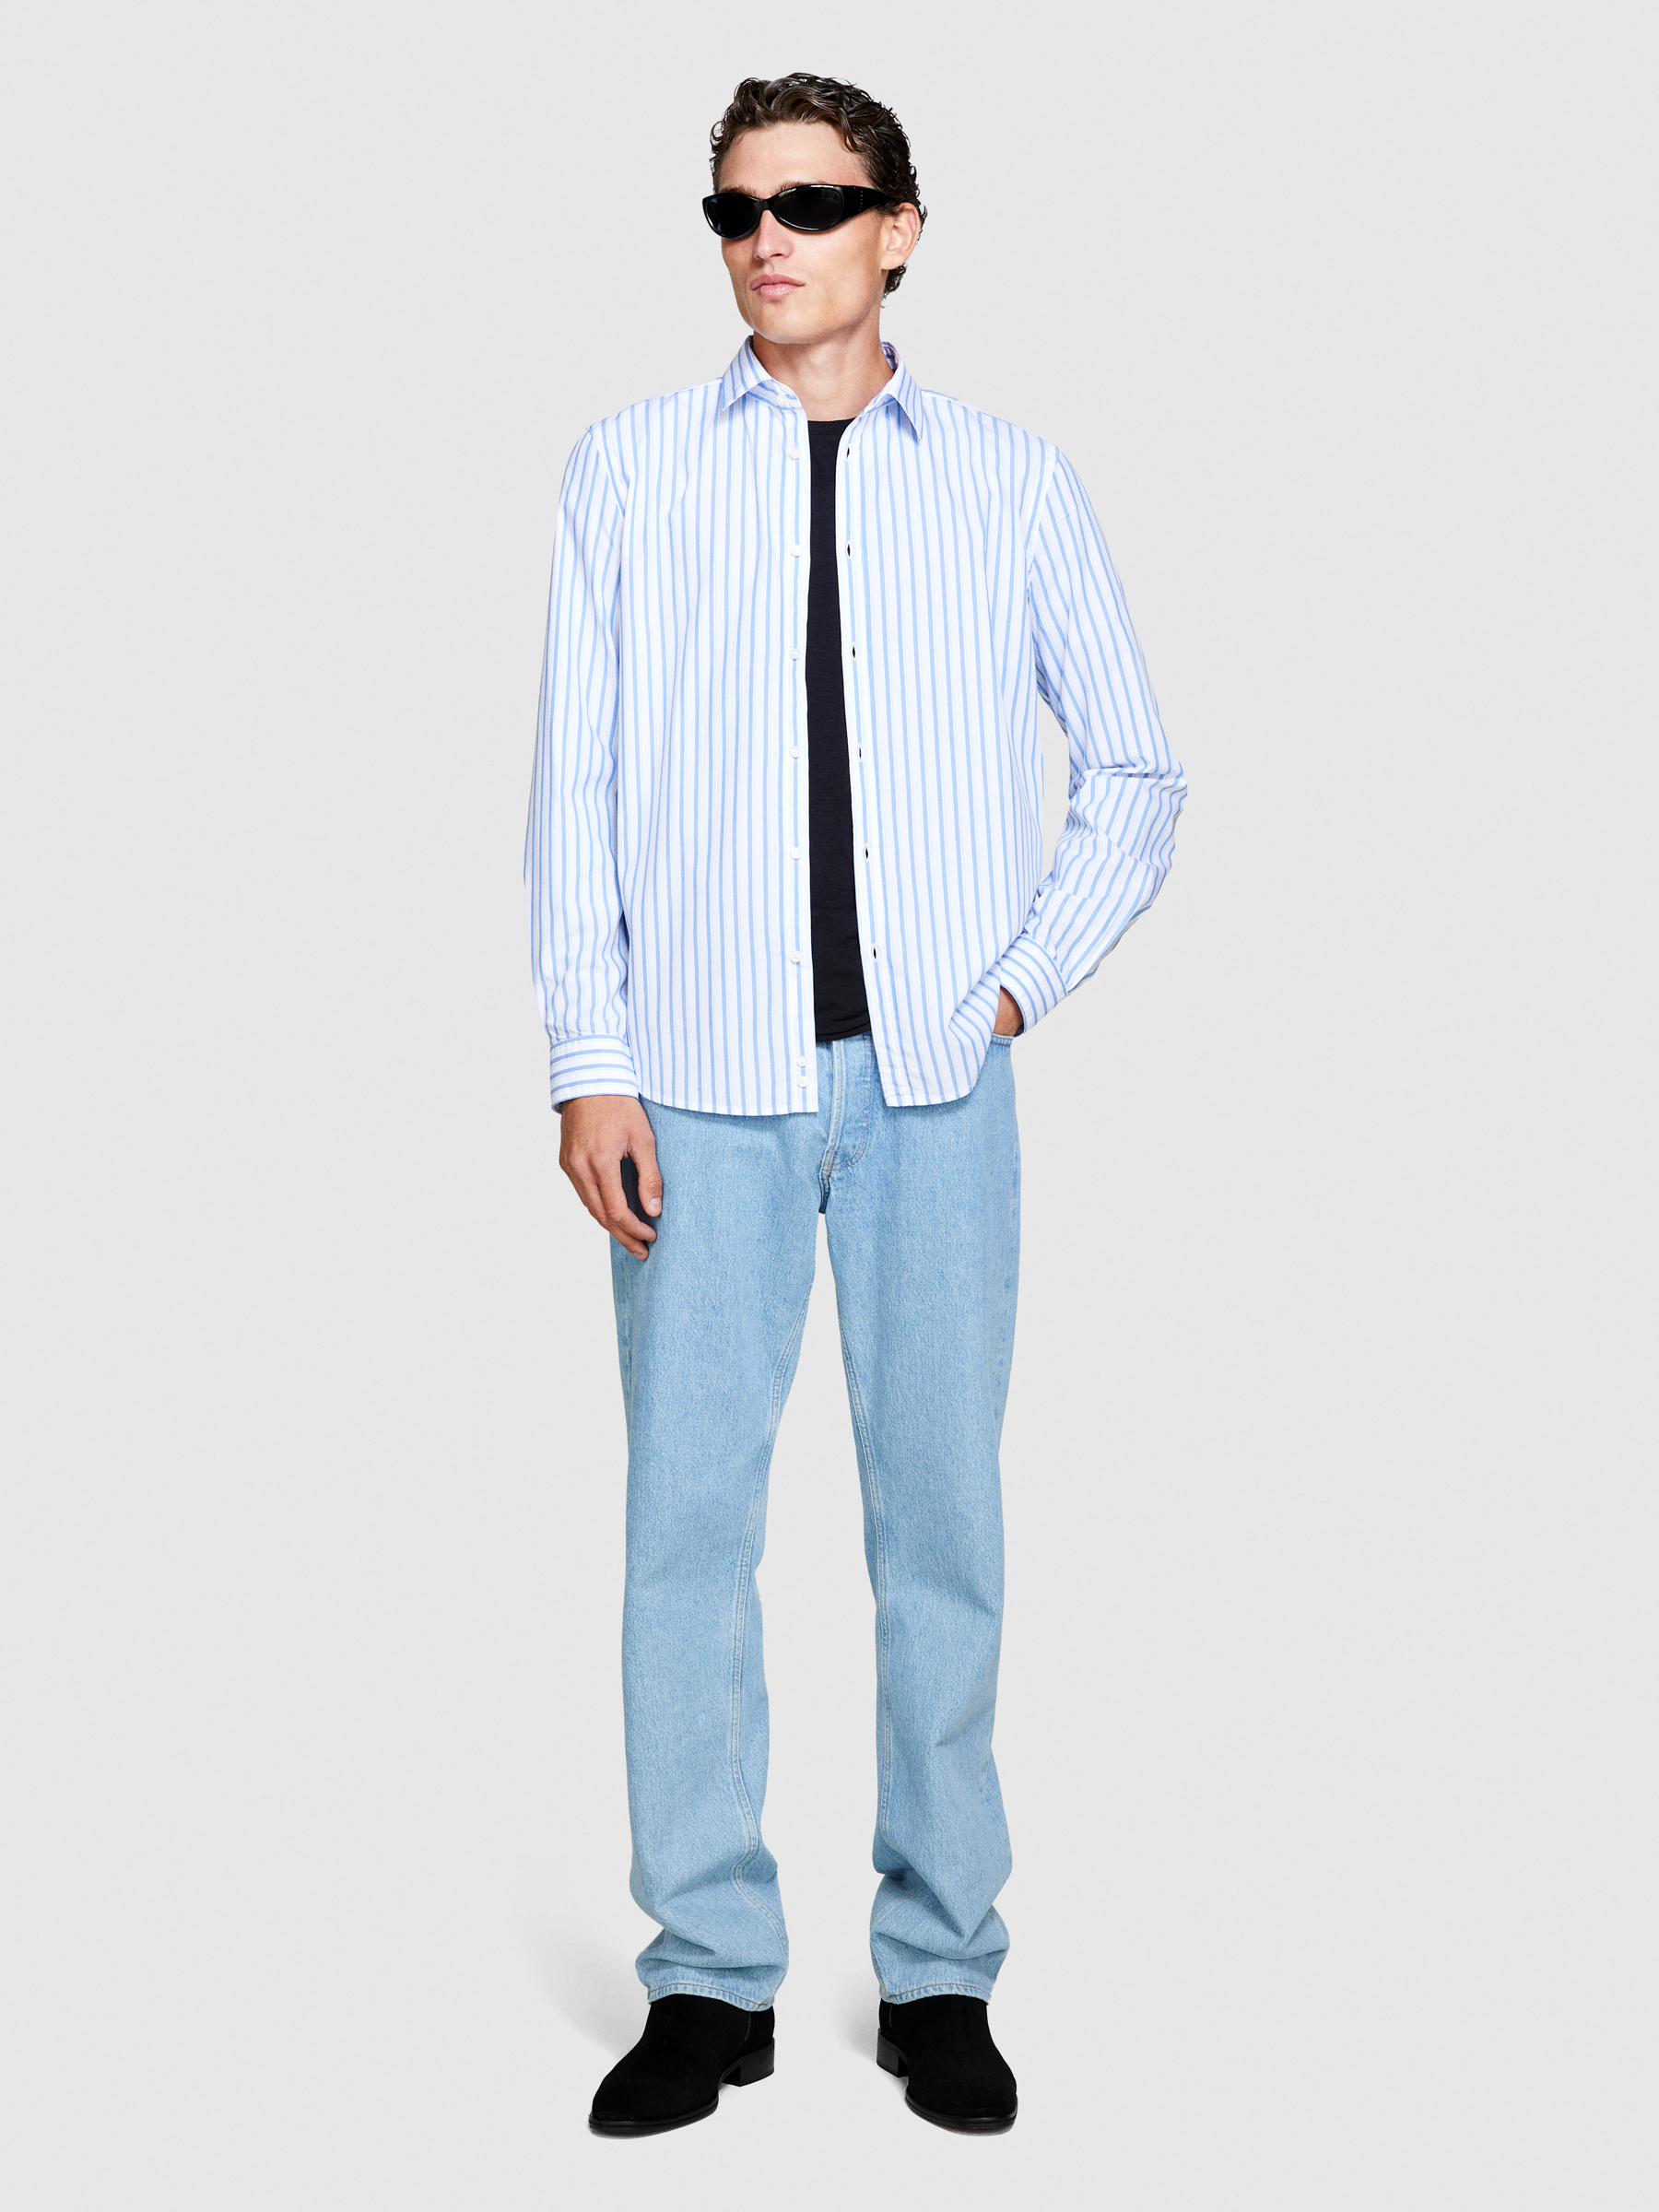 Sisley - Striped Shirt, Man, Light Blue, Size: 46